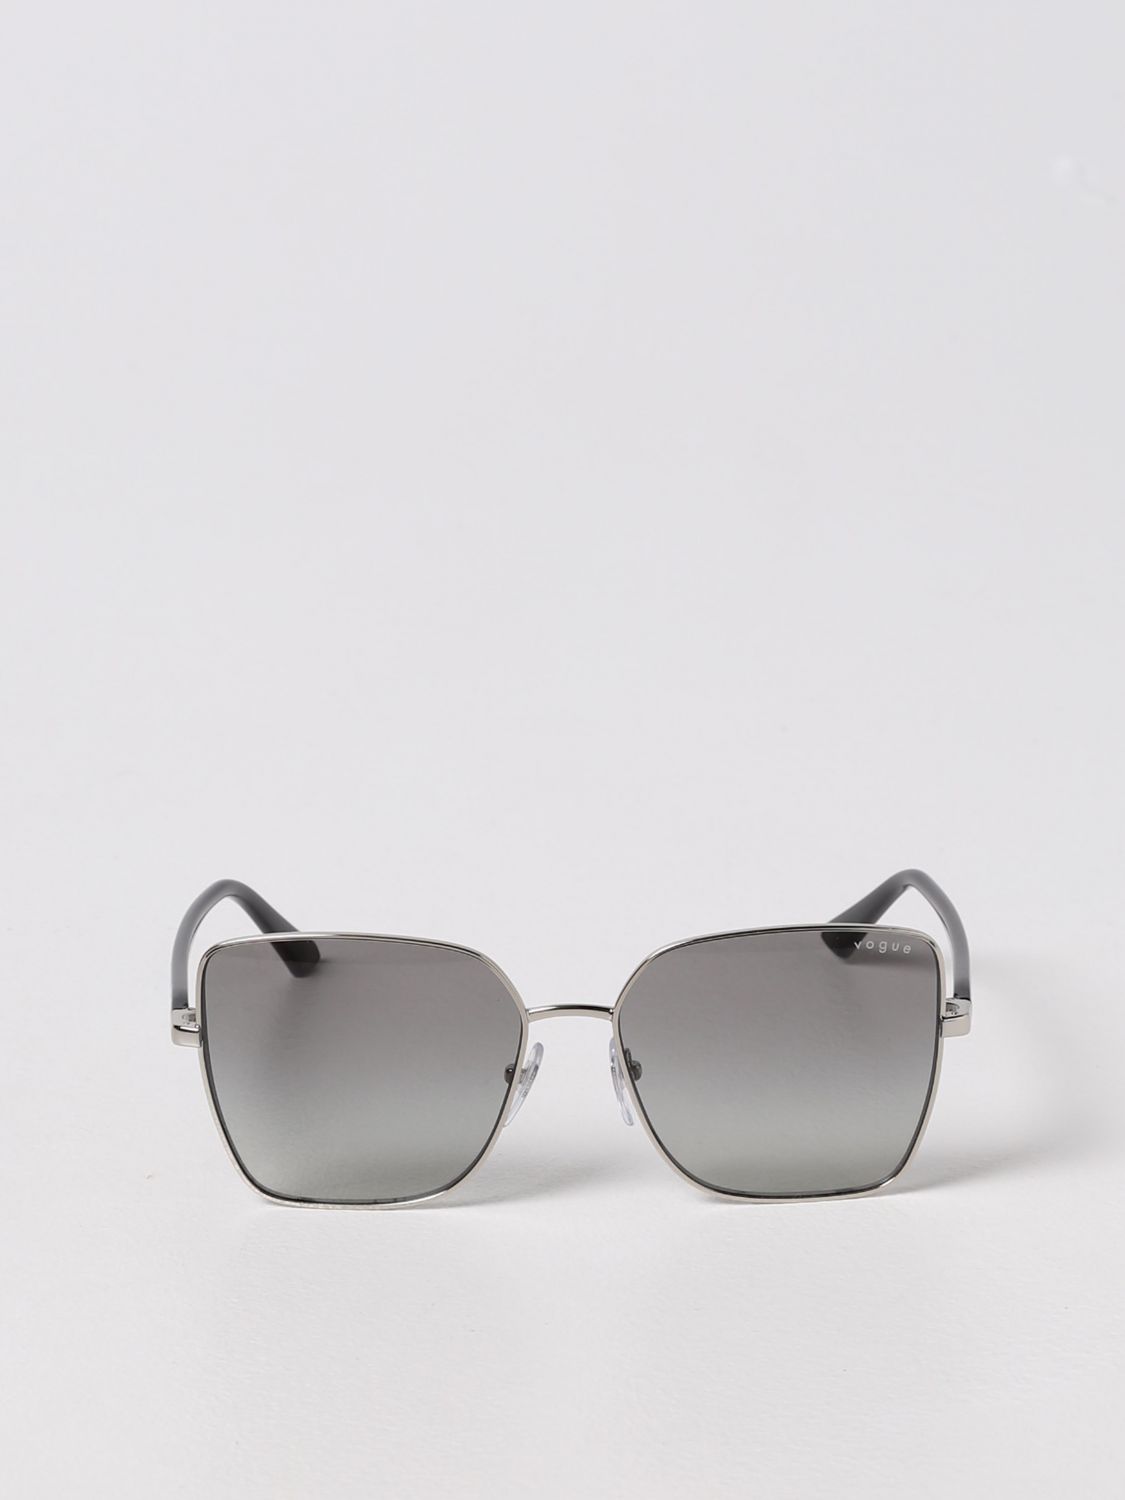 Glasses Vogue: Vogue sunglasses in metal grey 2